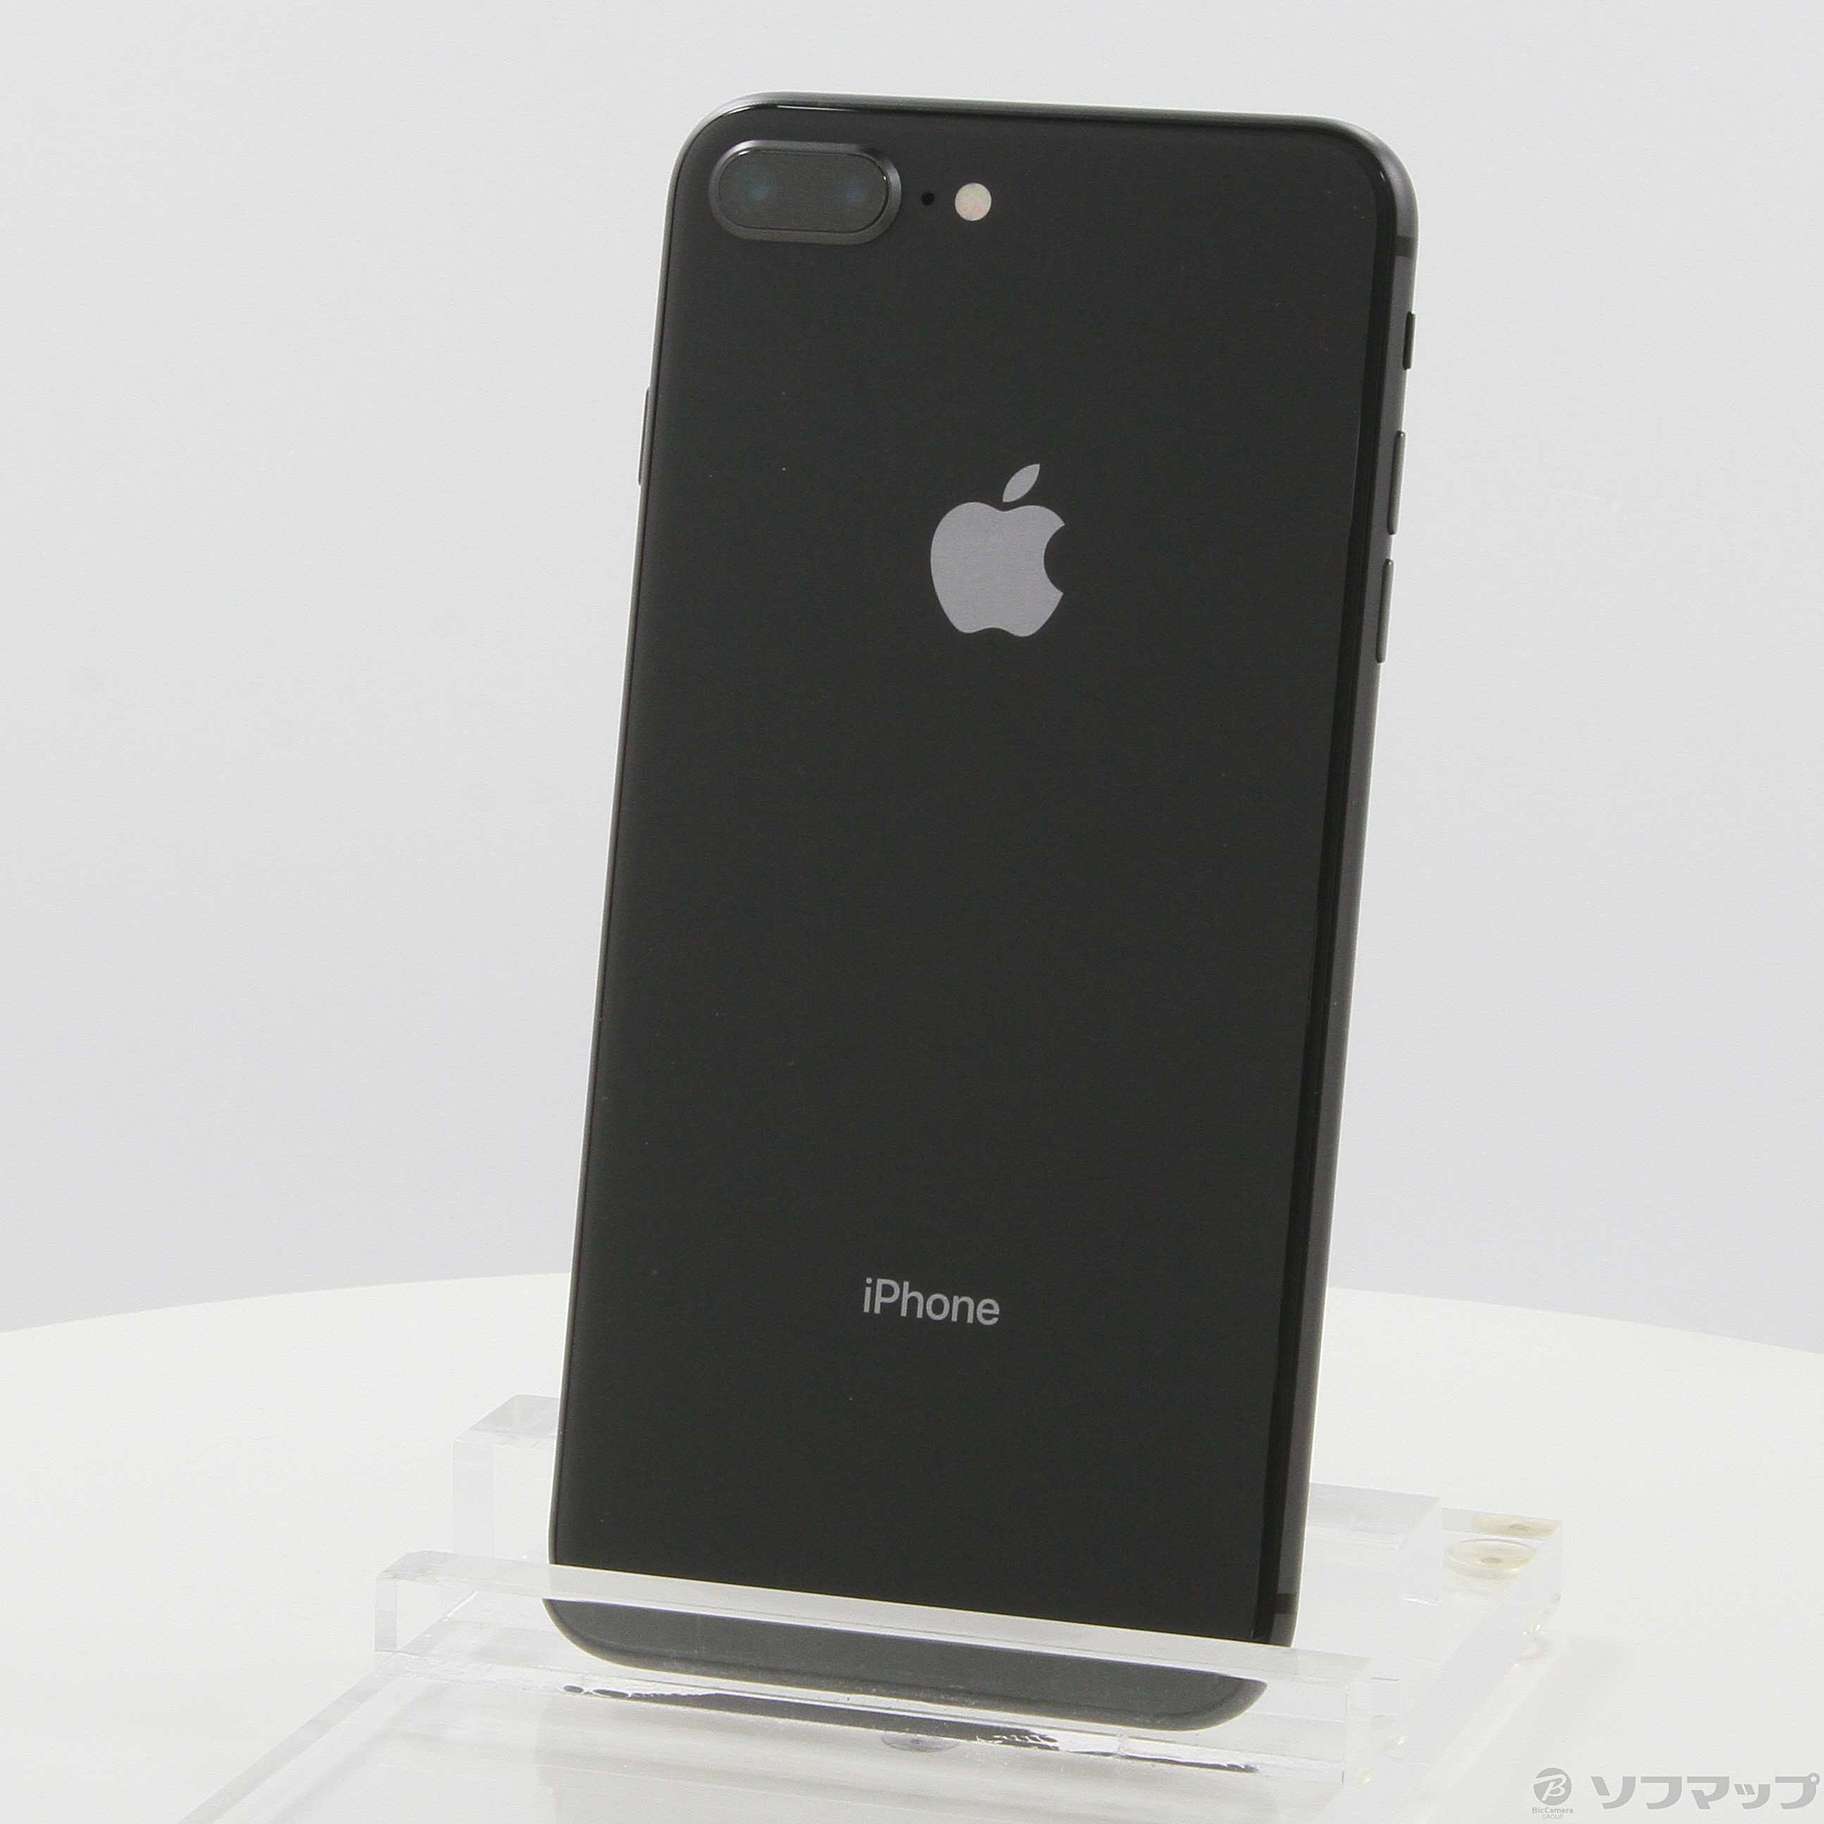 iPhone 8 Plus 256GB SIMフリー スペースグレー ブラックカラースペースグレイ